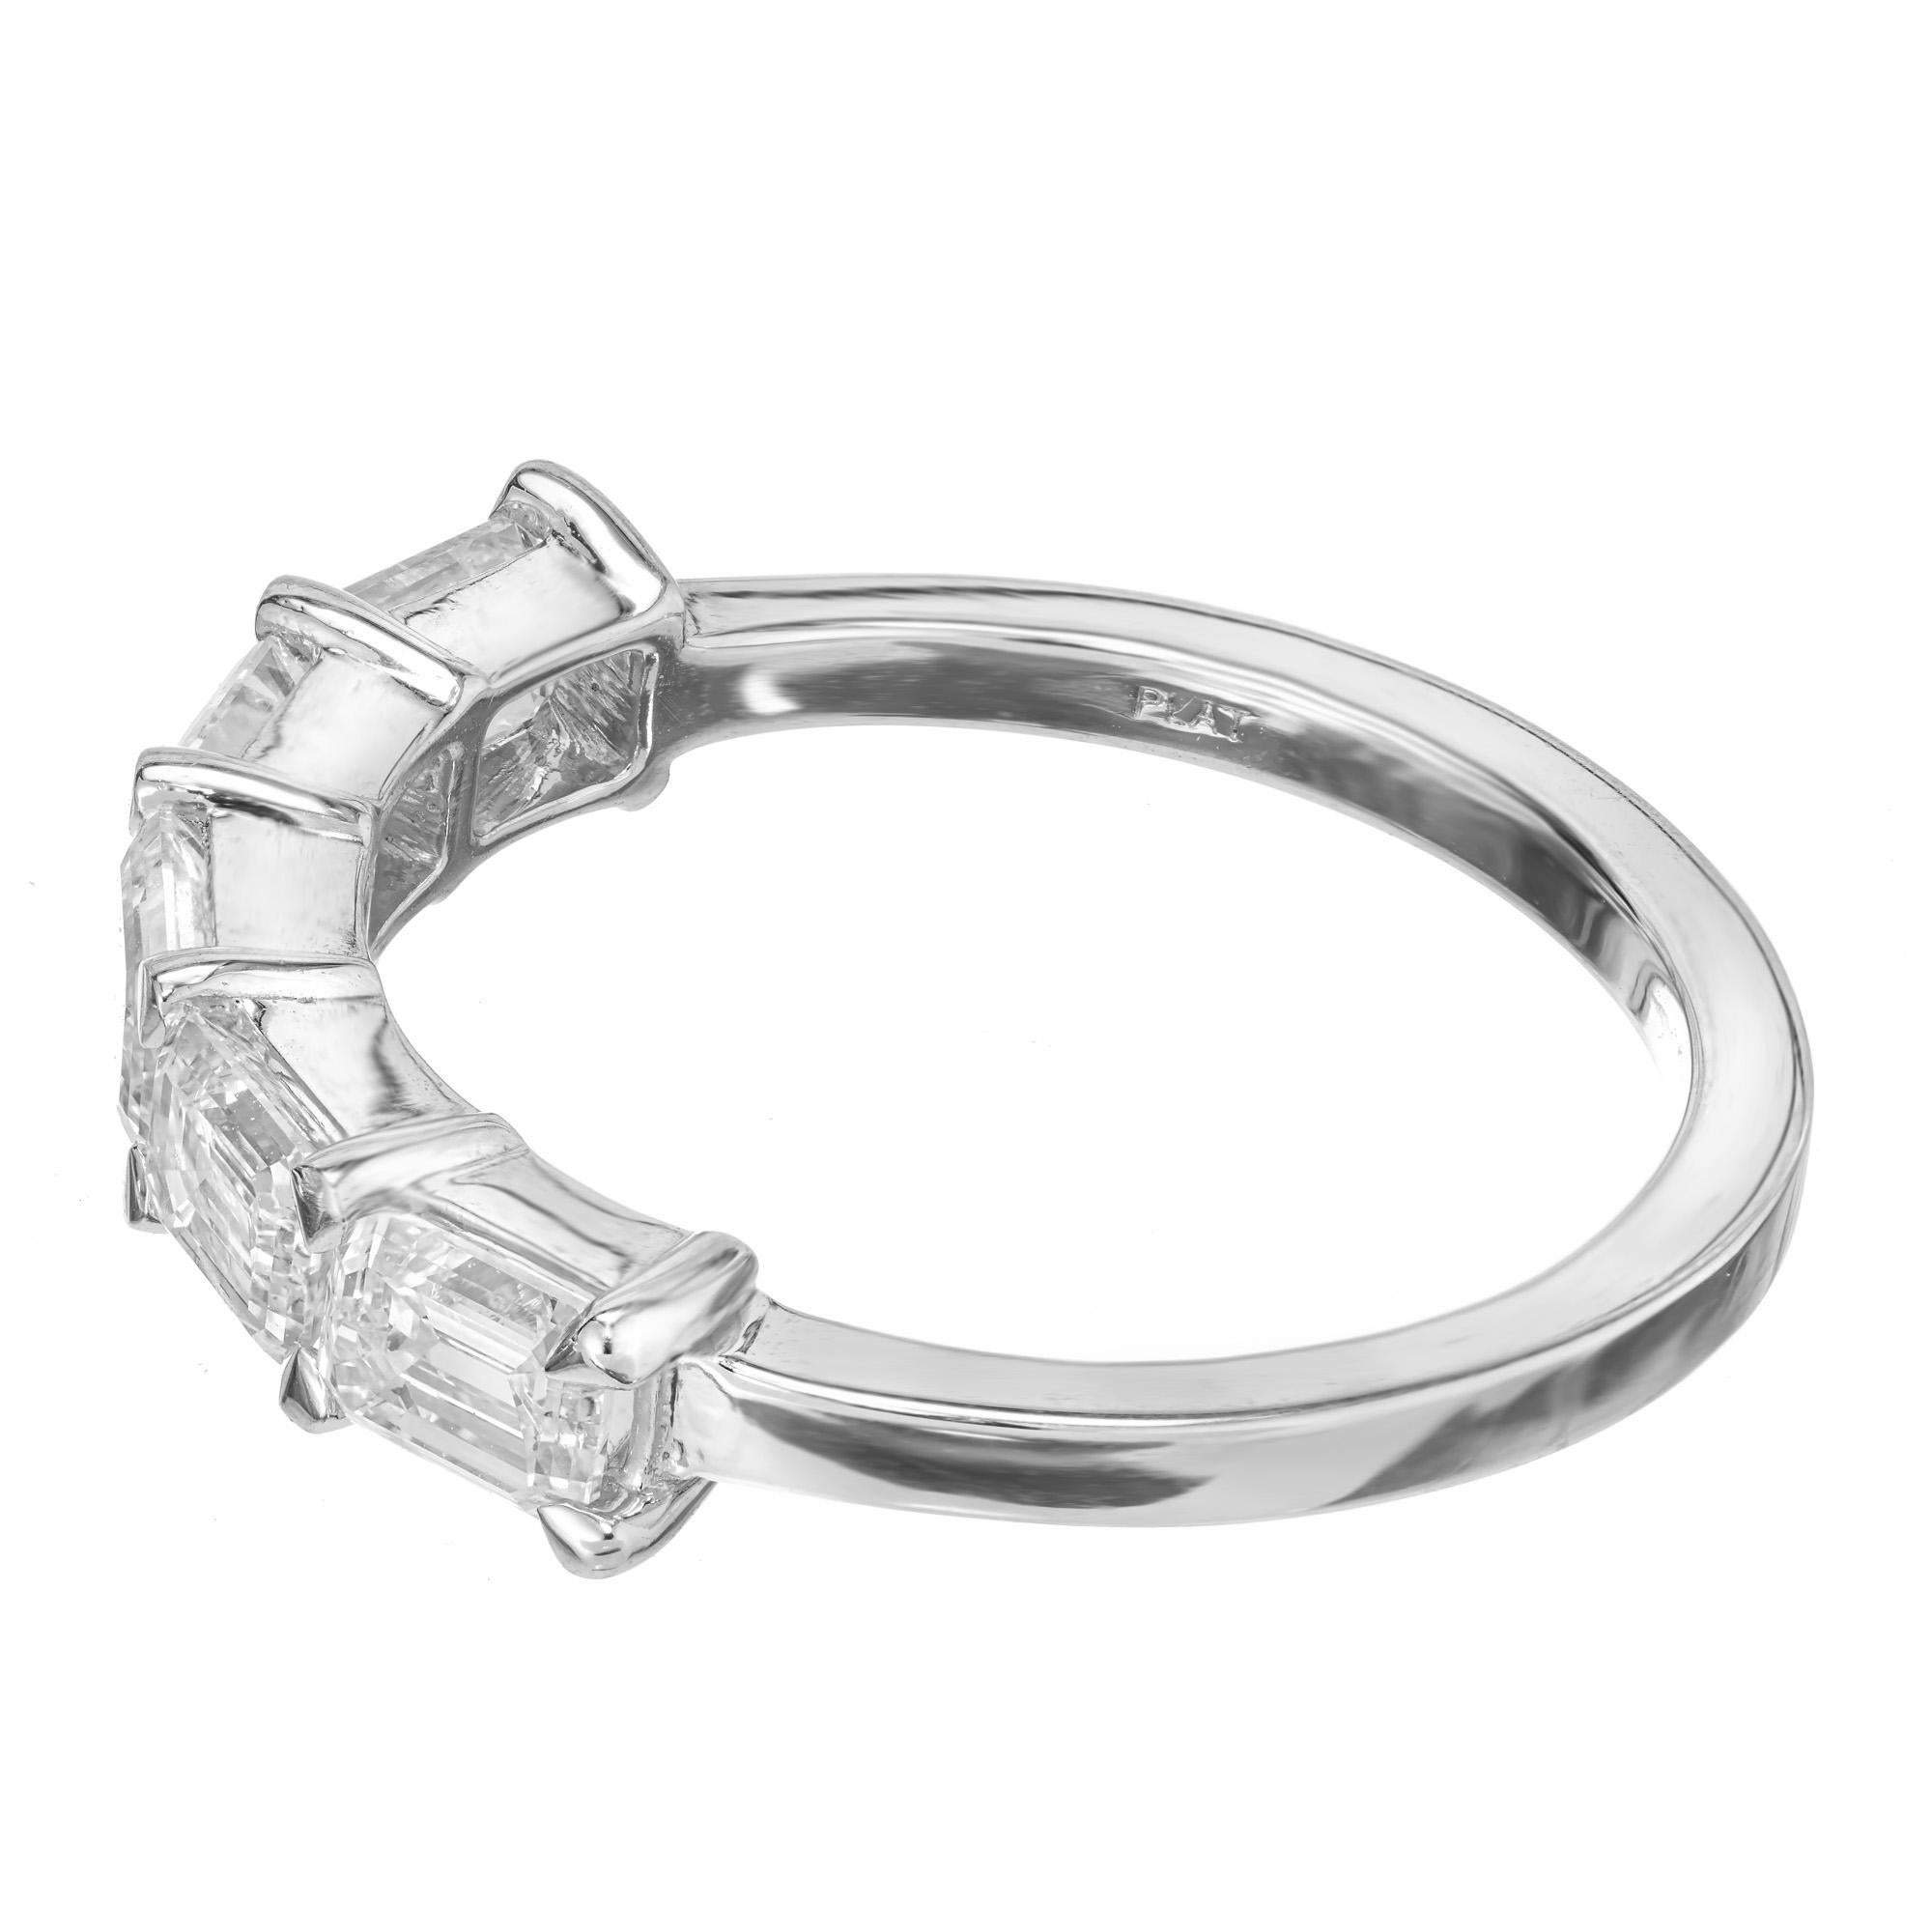 Women's Peter Suchy 1.55 Carat Emerald Cut Diamond Platinum Wedding Band Ring For Sale